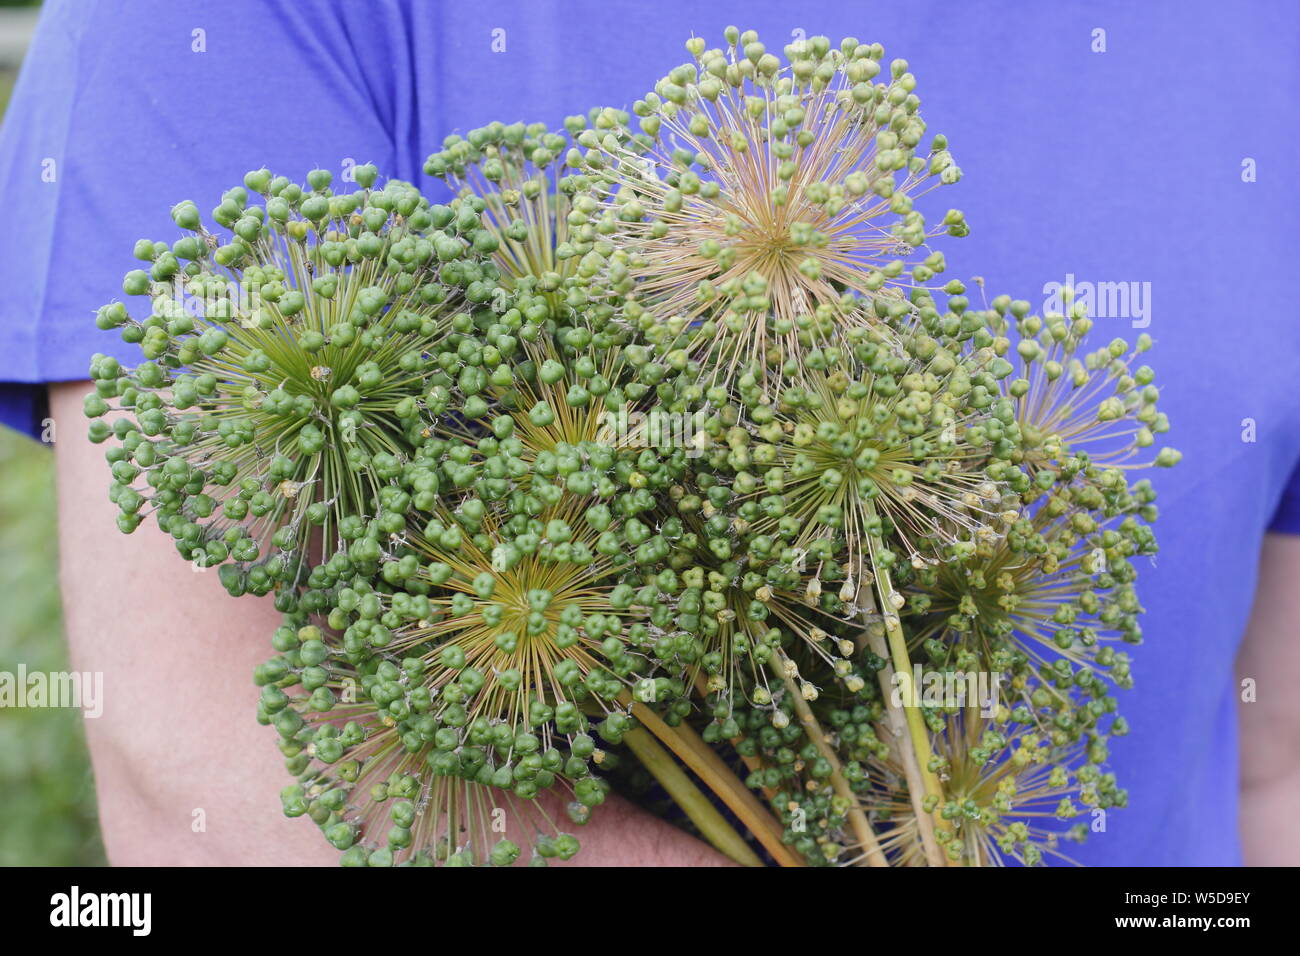 Allium hollandicum 'Purple Sensation'. Freshly cut allium seedheads for drying and indoor display Stock Photo